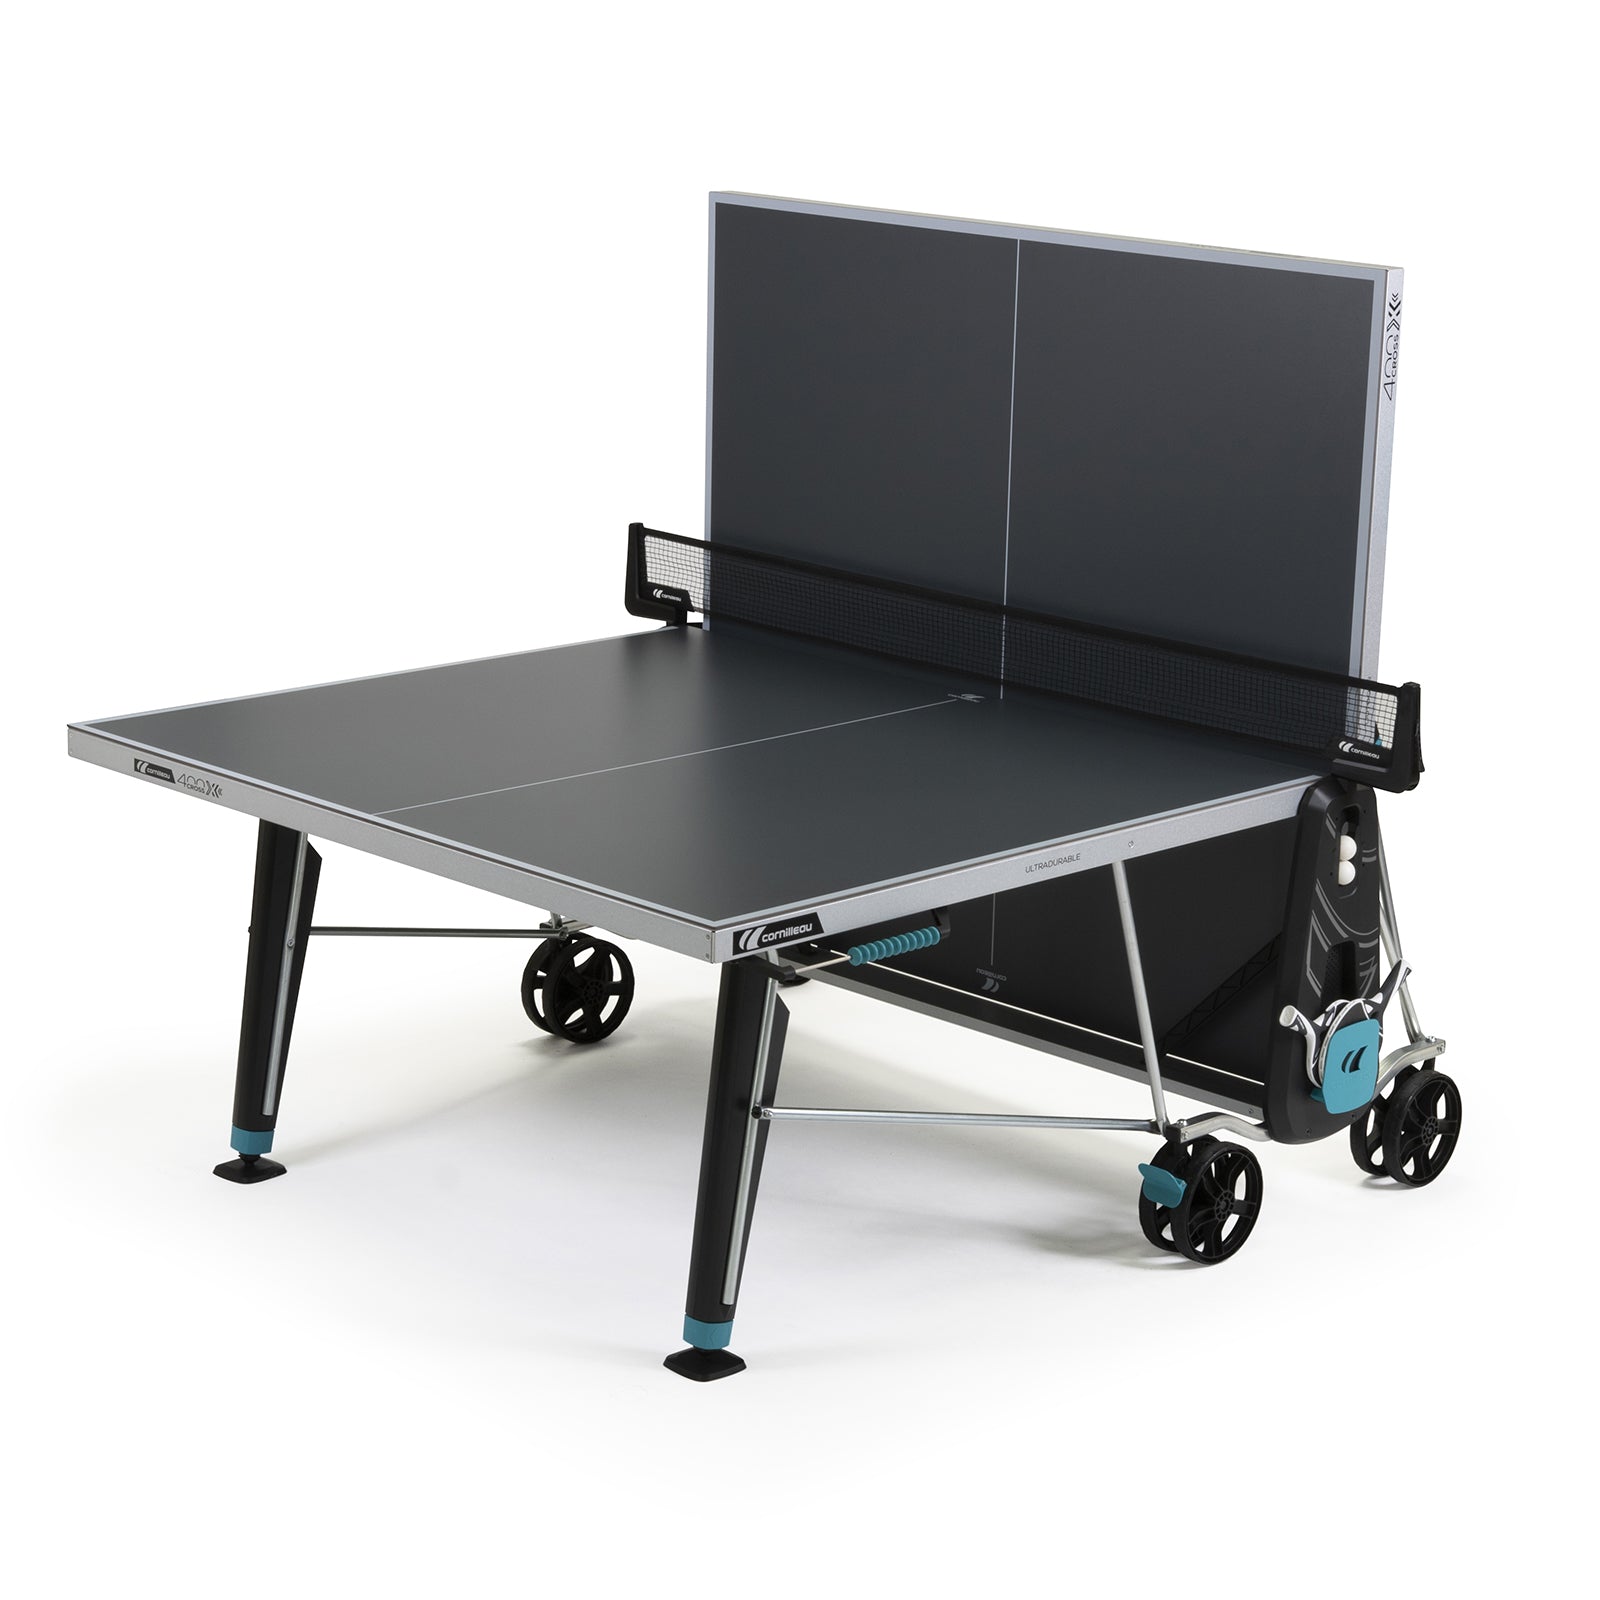 Cornilleau 400X Sport Grey Outdoor Table Tennis Table